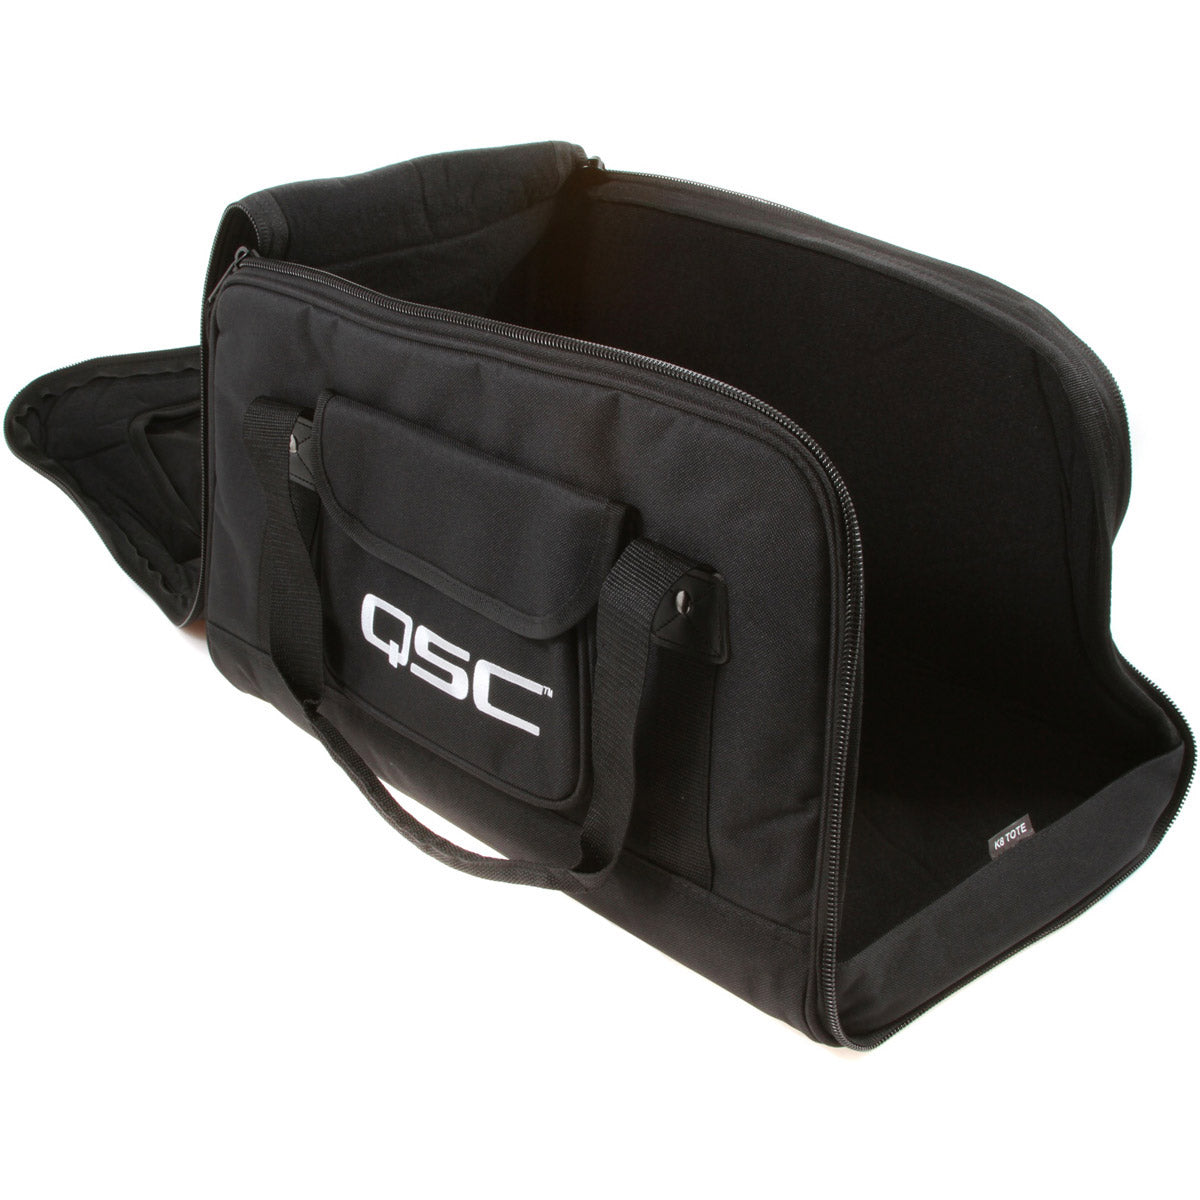 QSC K12 Tote Bag